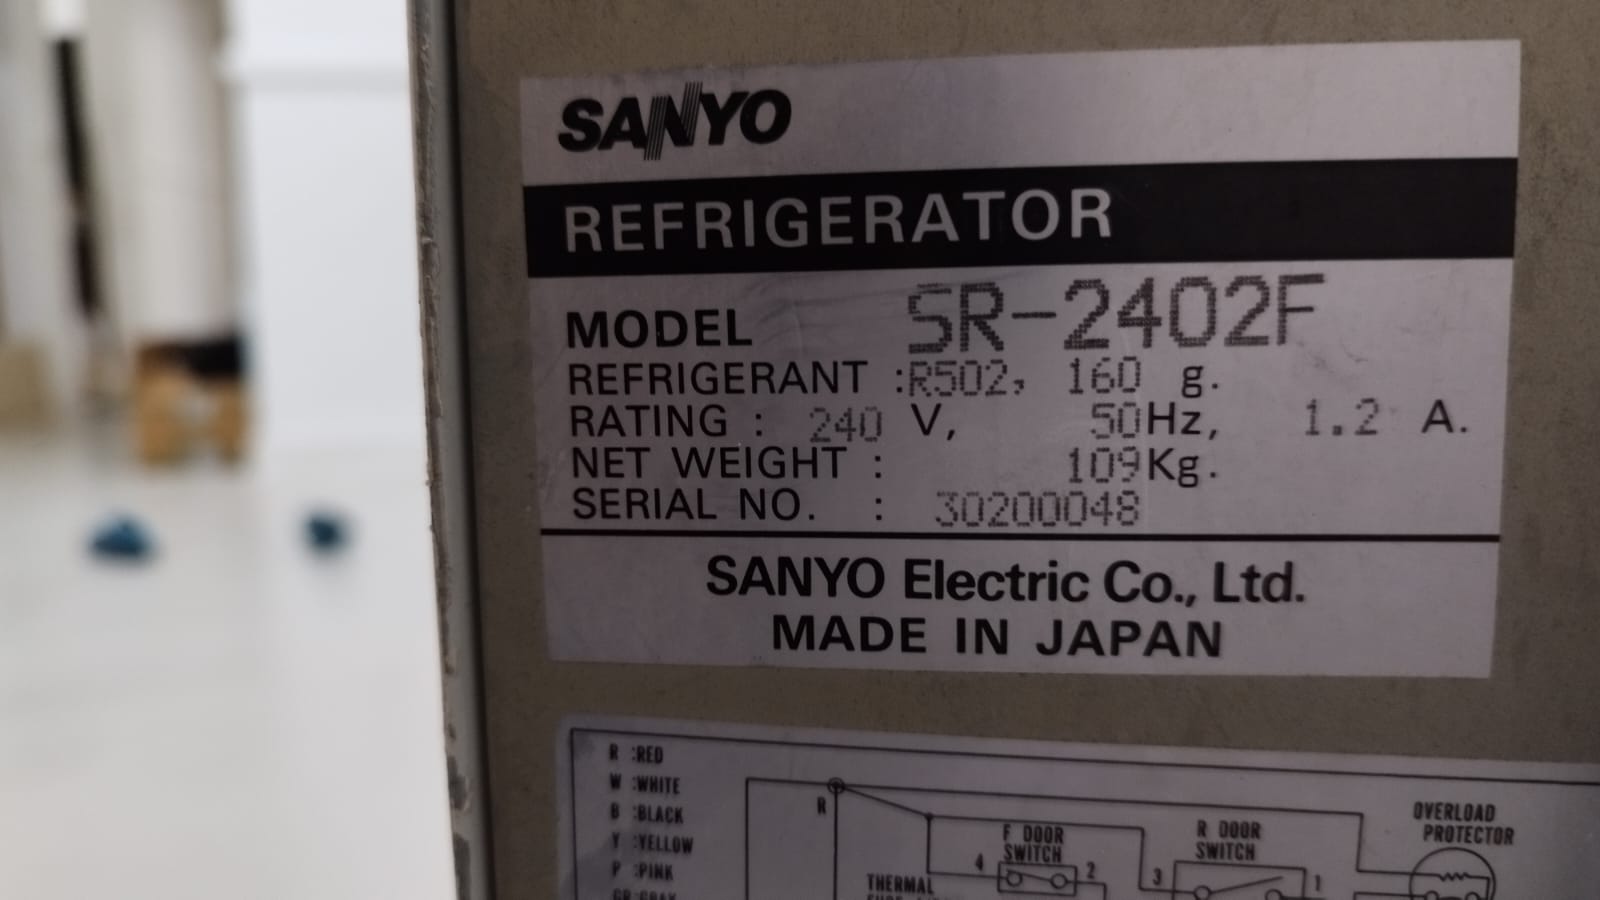 SANYO DOUBLE DOOR REFRIGERATIOR JUMBO24 MADE IN JAPAN FOR SALE IN REGGAE